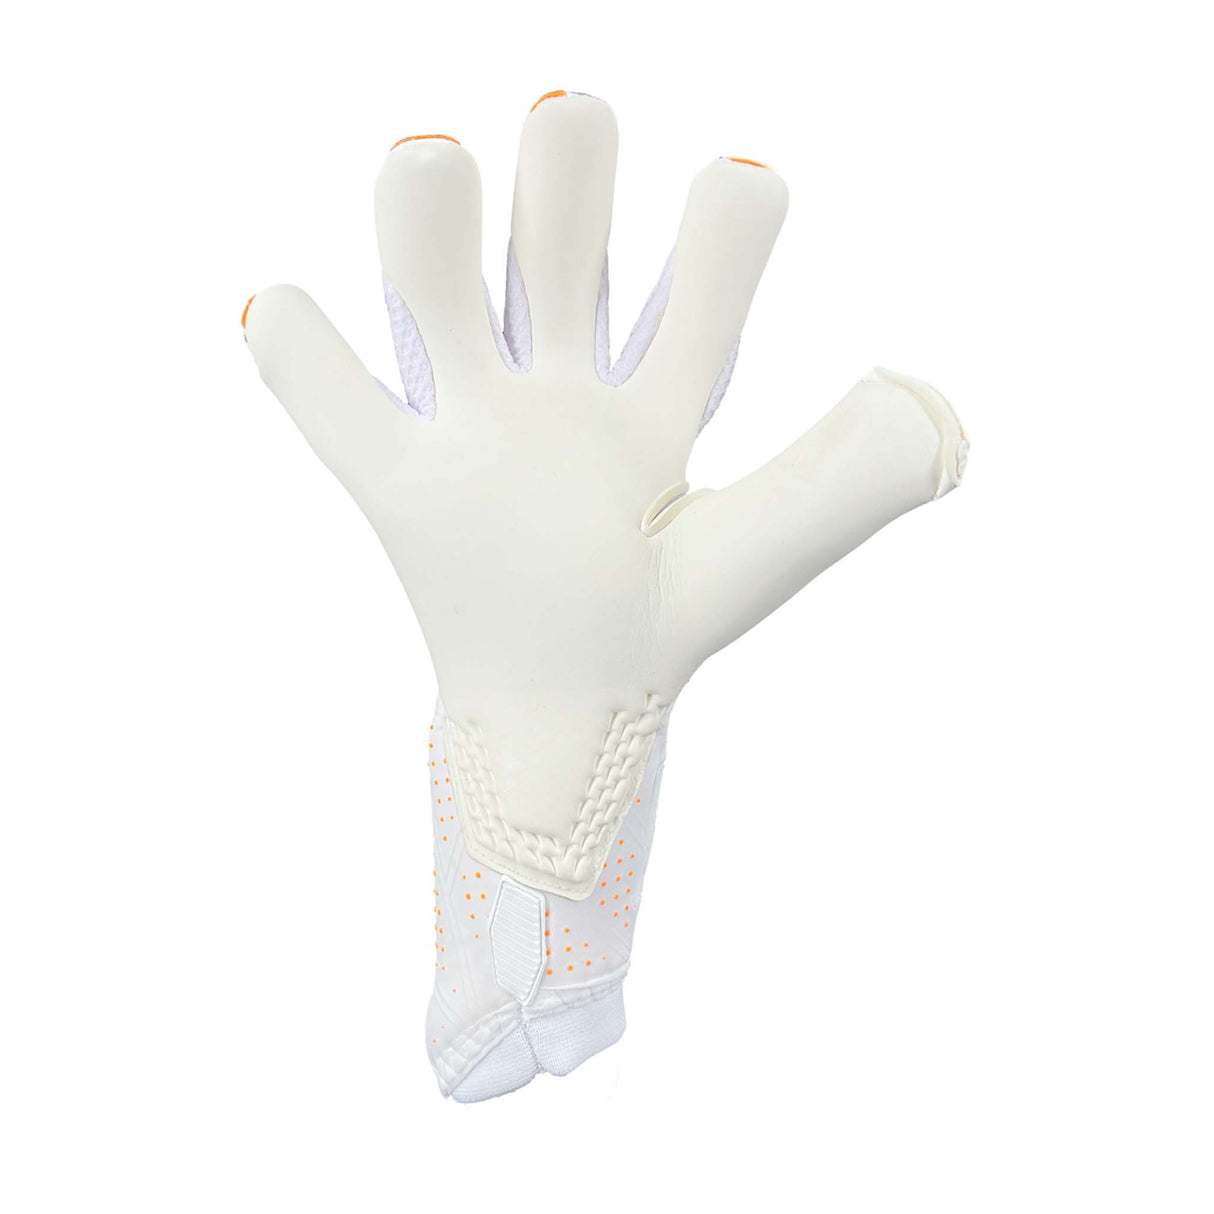 RG Goalkeeper Gloves Bionix 2021-22 Gants de gardien de but de soccer orange blanc paume